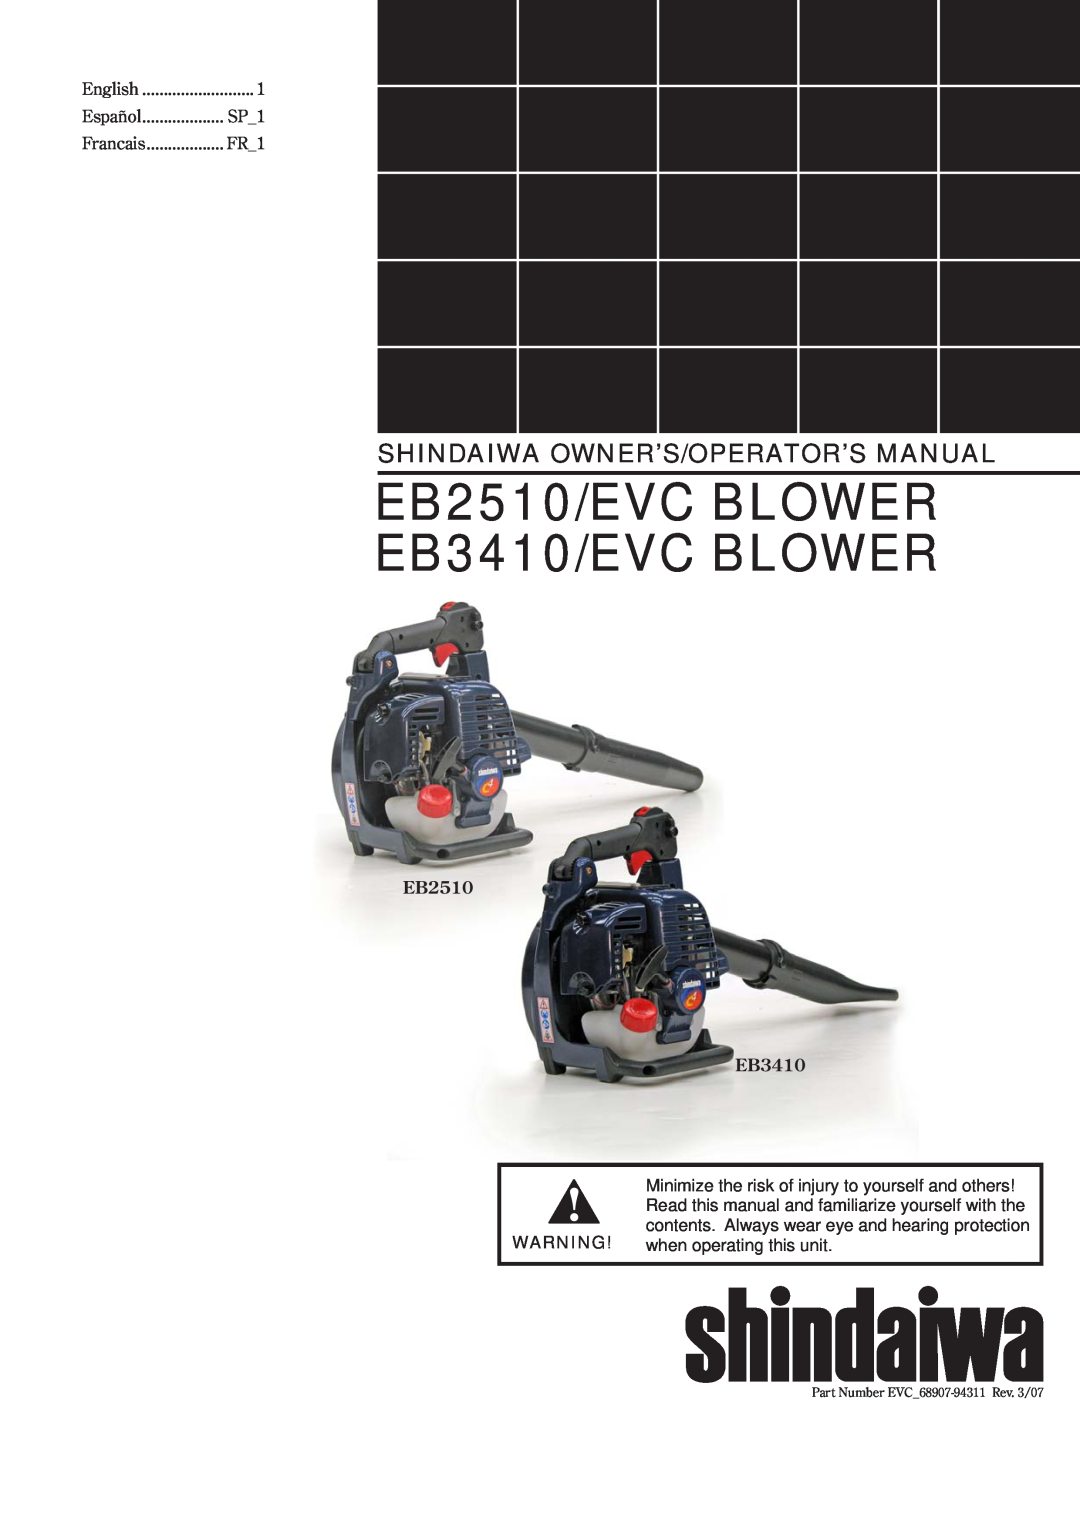 Shindaiwa 68907-94311 manual Shindaiwa Owner’S/Operator’S Manual, EB2510/EVC BLOWER EB3410/EVC BLOWER 